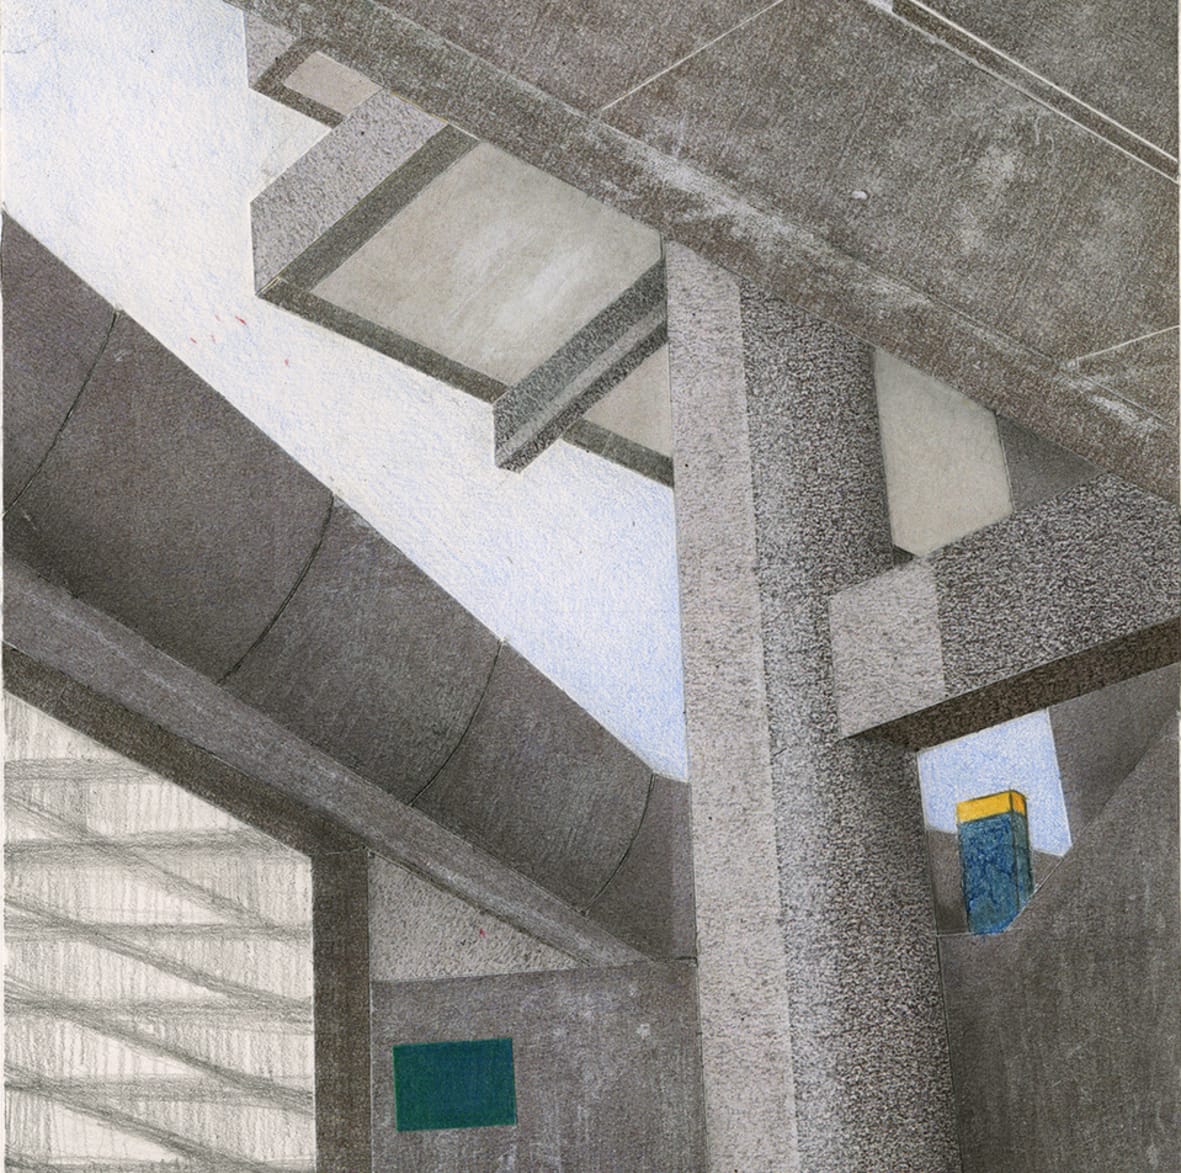 The concrete structure about Barbican estate.